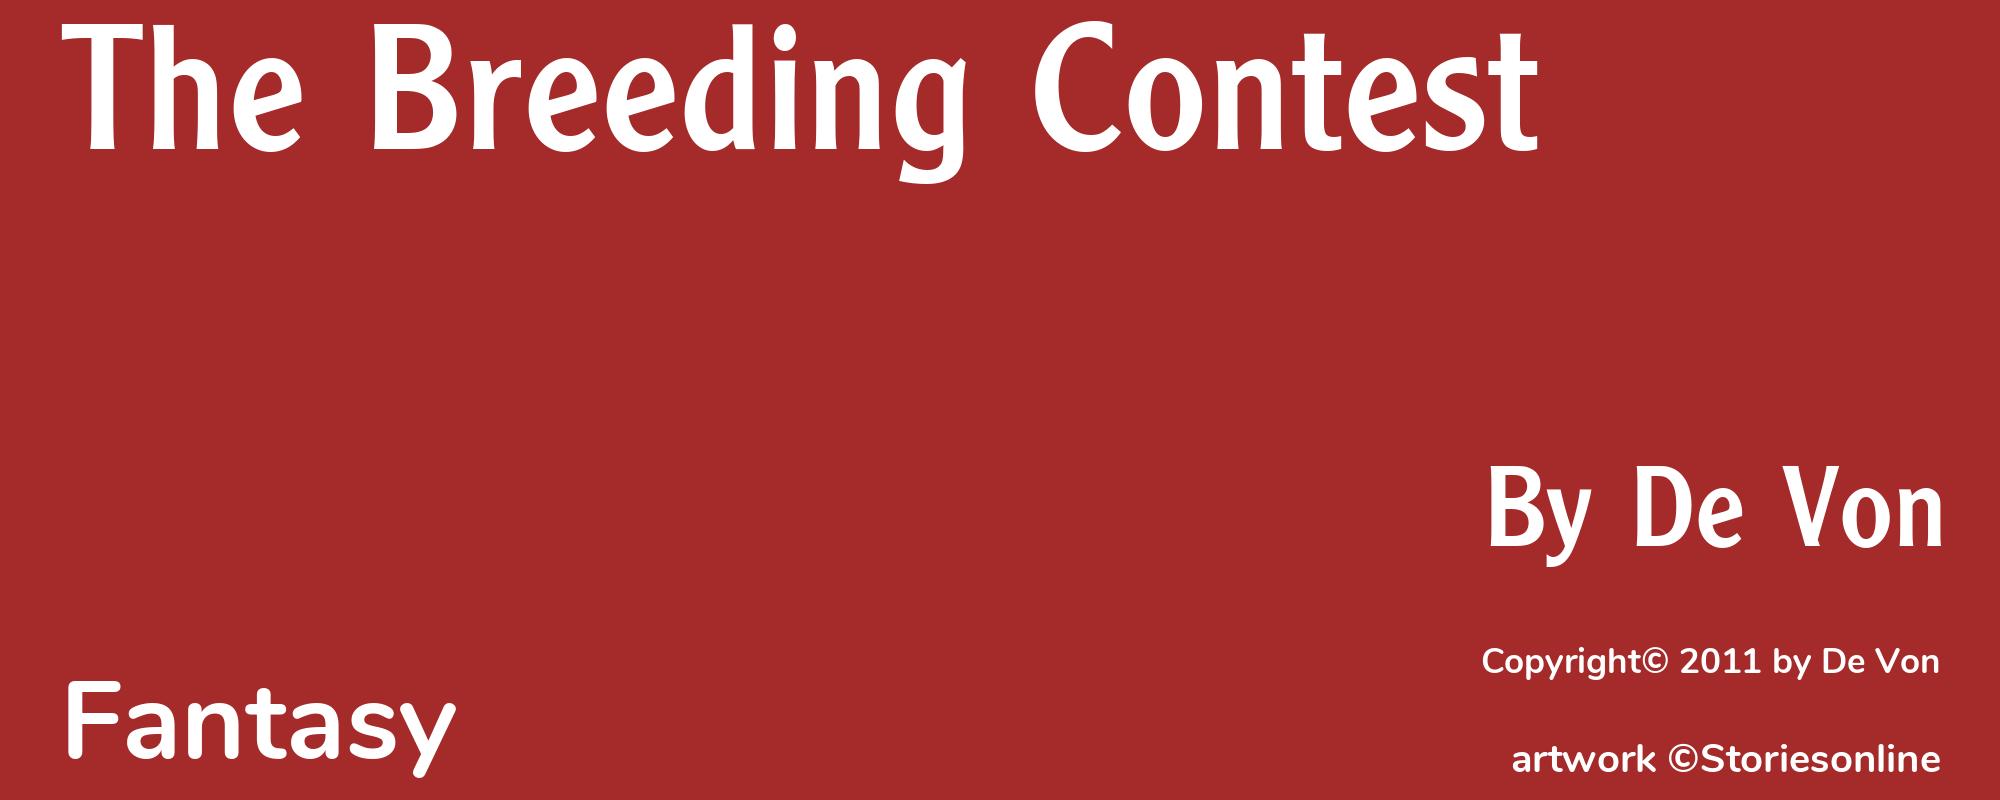 The Breeding Contest - Cover